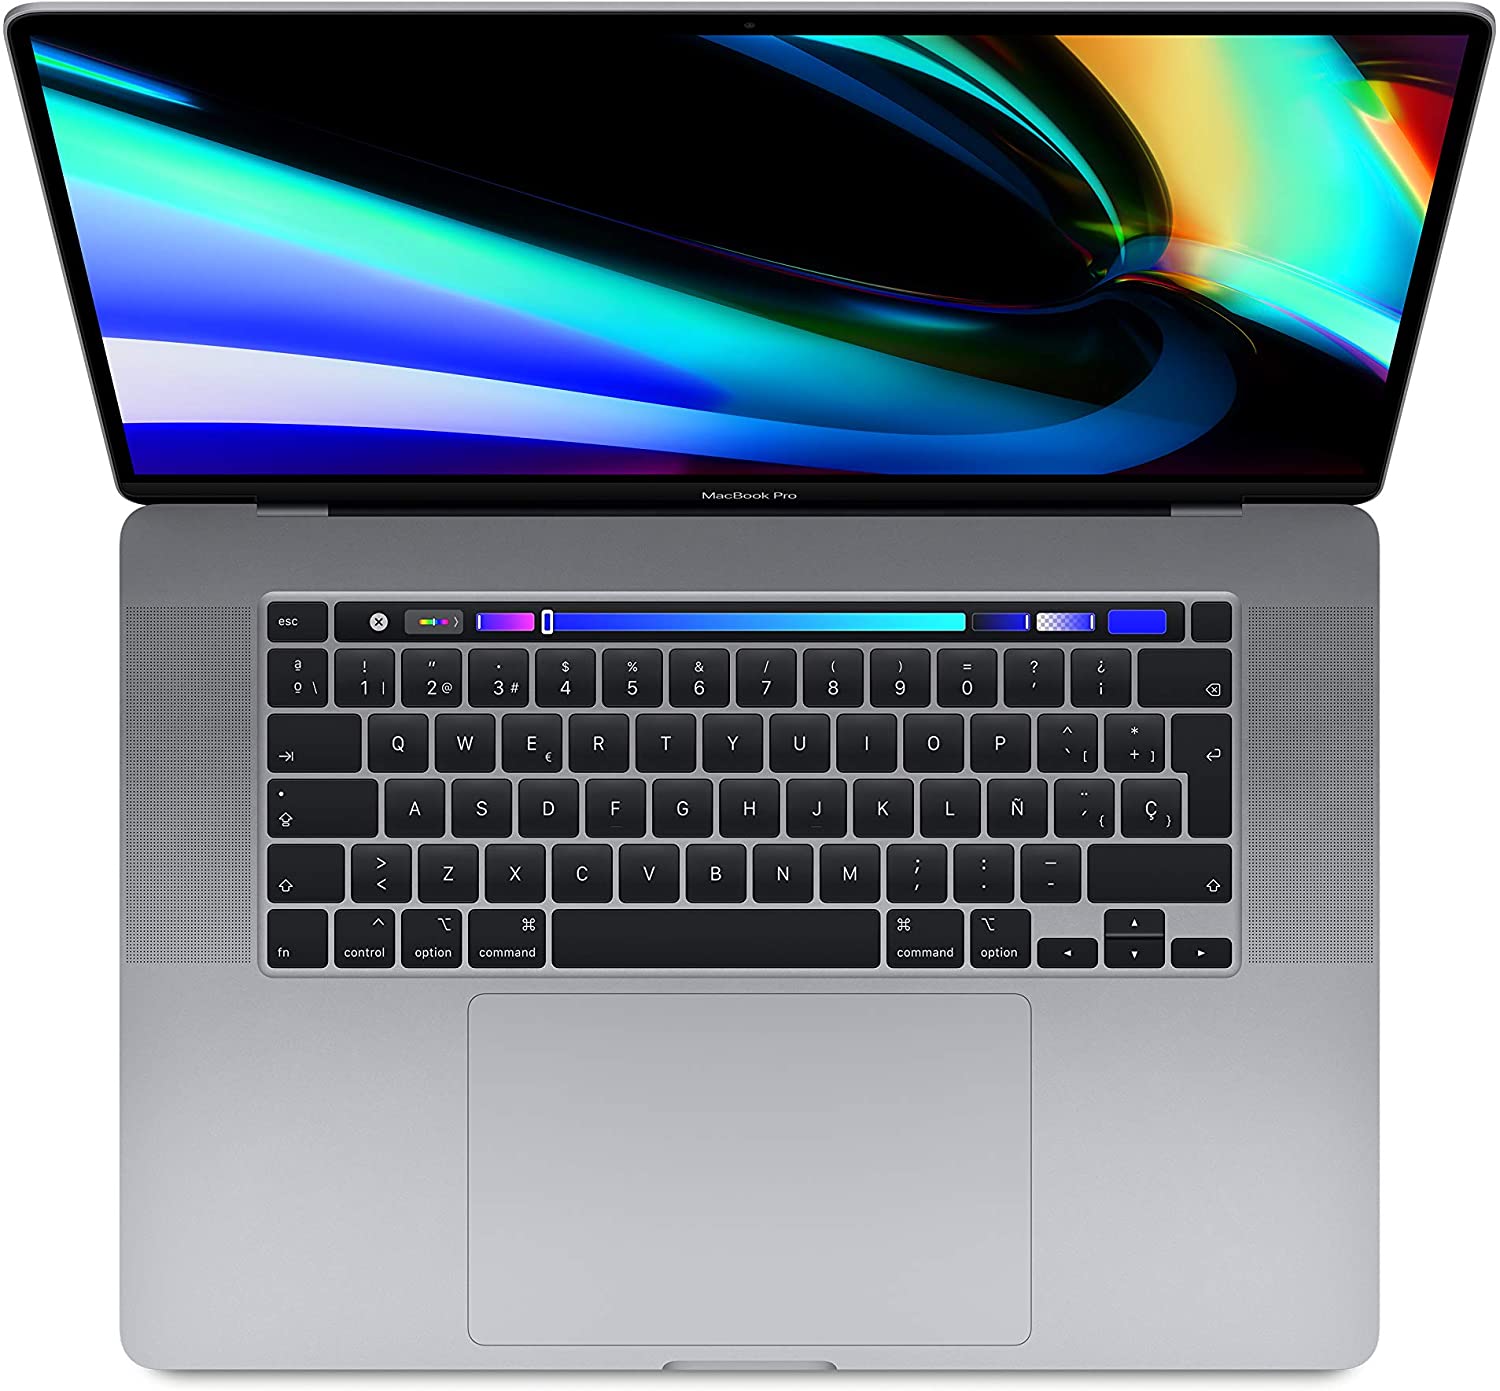 Apple MacBook Pro MVVK2 2019 Laptop | Intel Core i9 2.3GHz, 16GB 